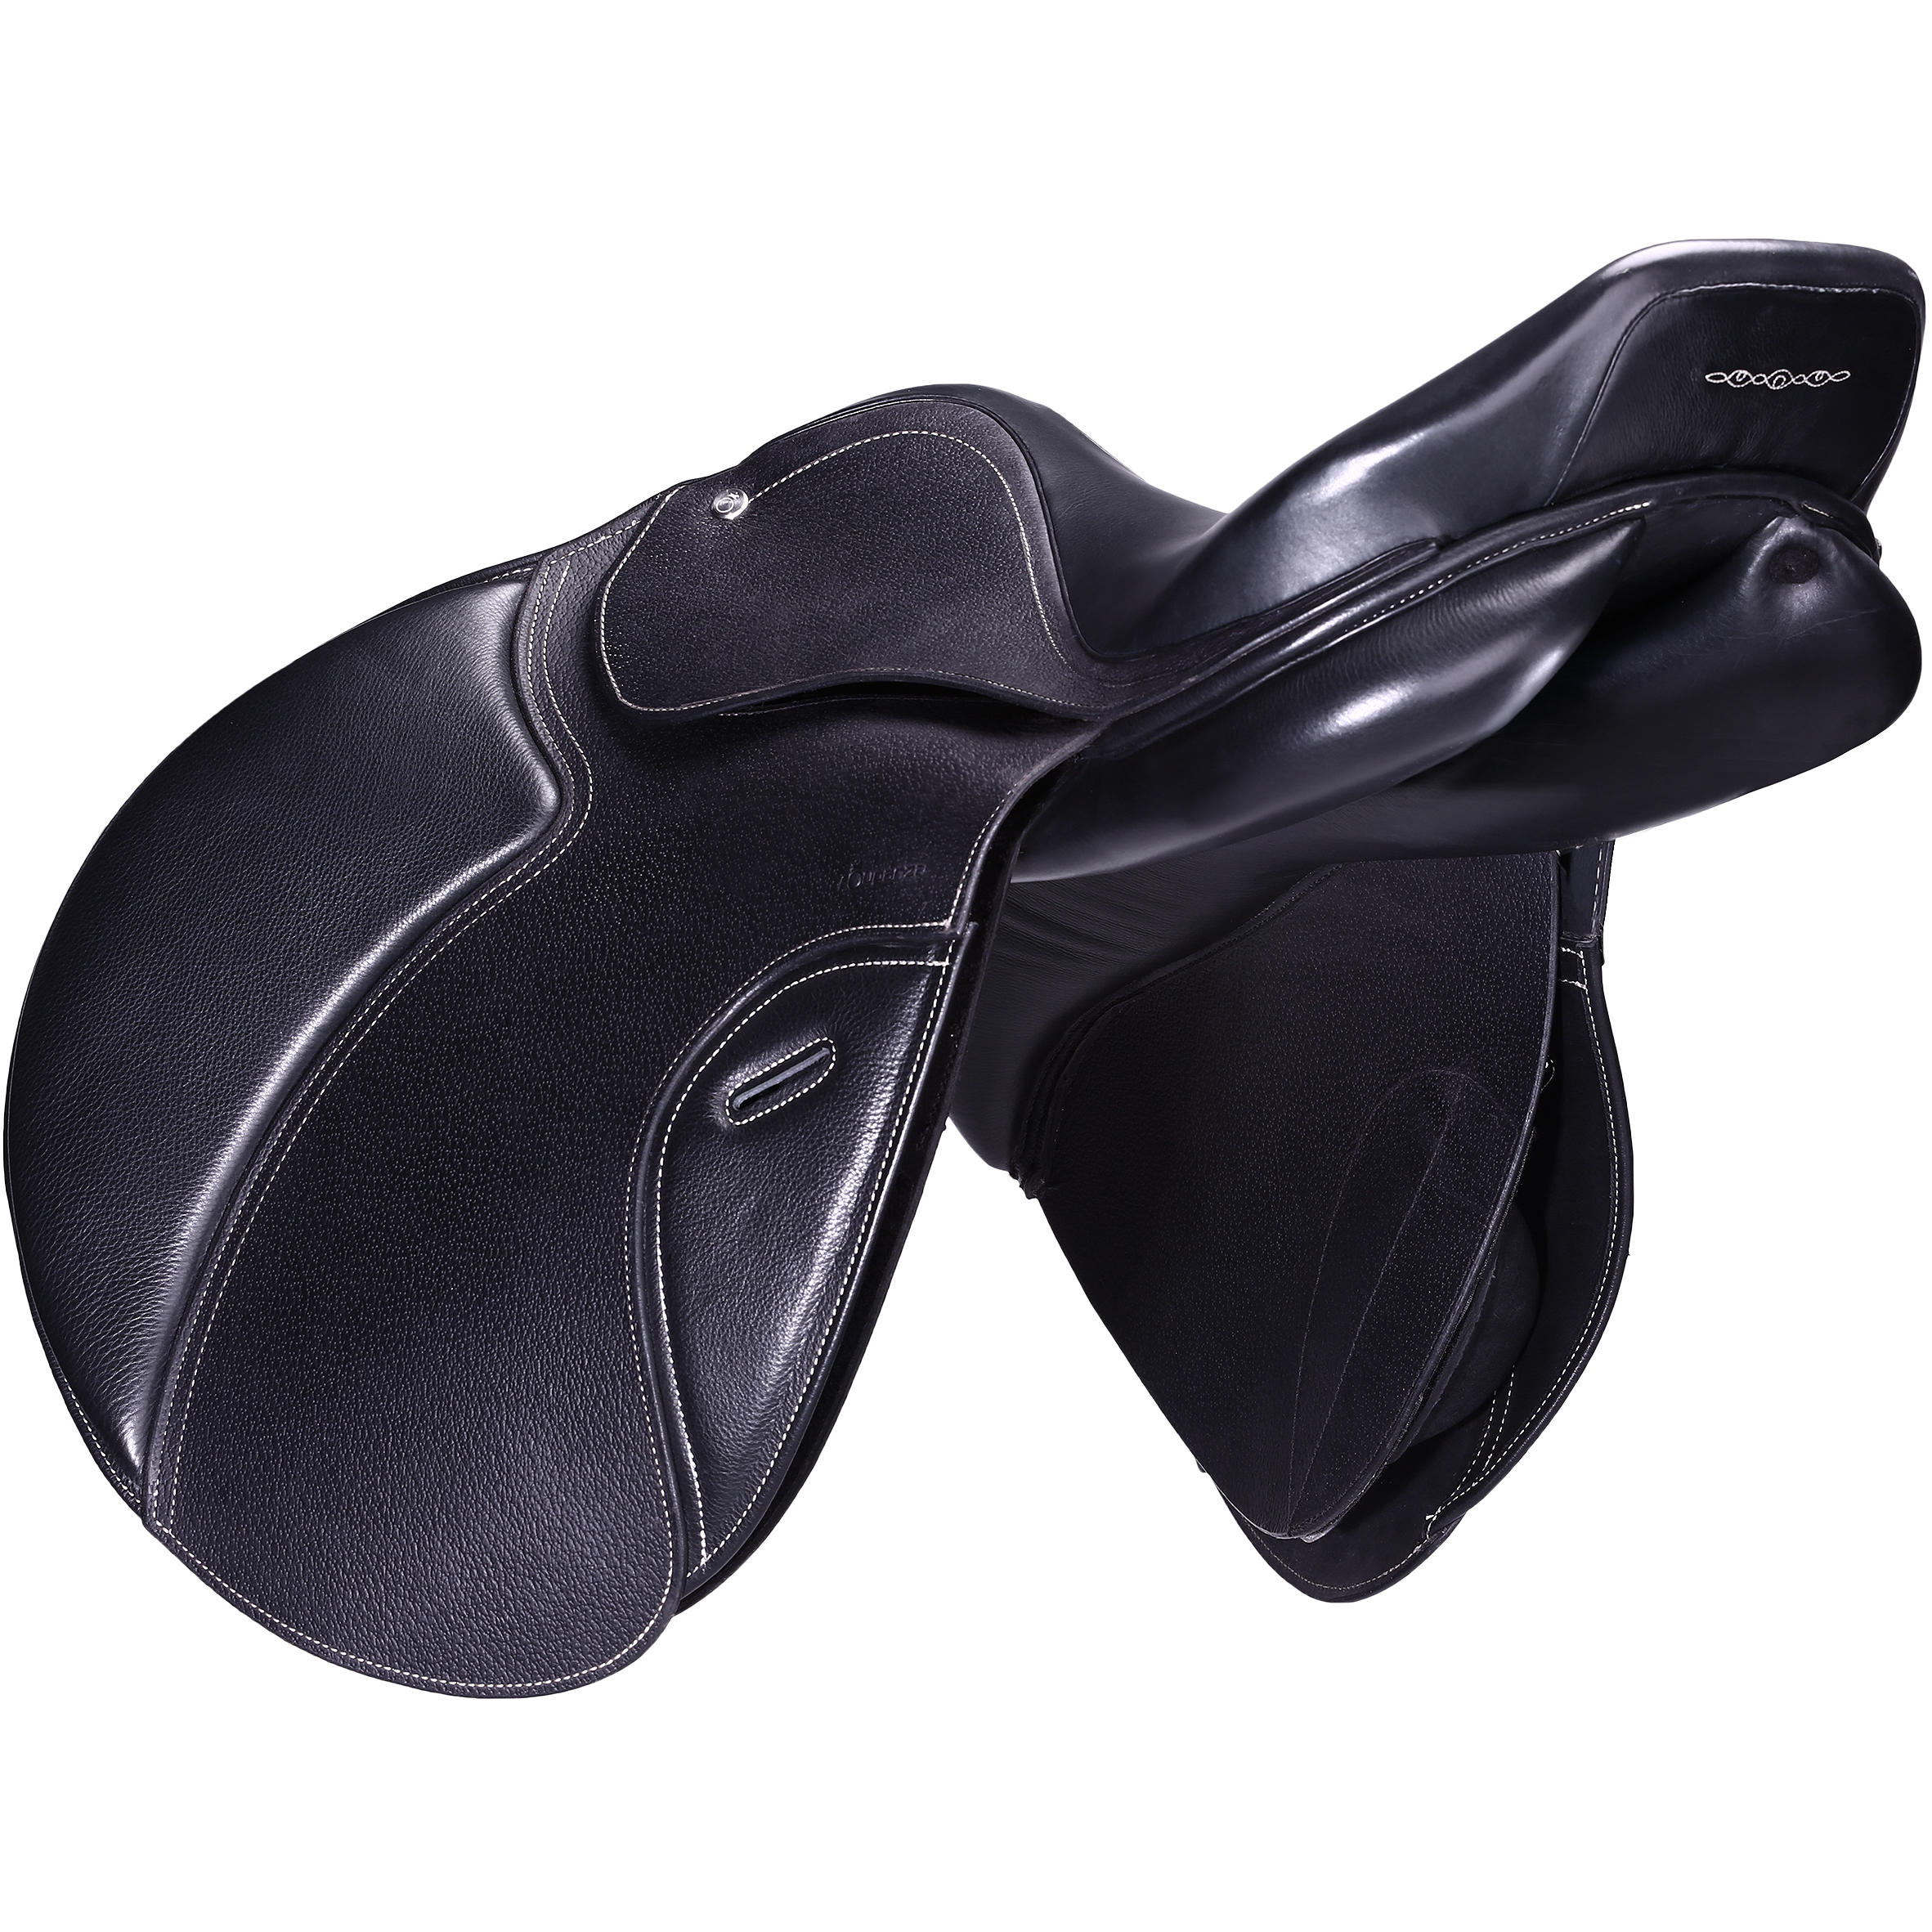 17.5" Versatile Leather Horse Riding Saddle for Horse Paddock - Black 2/15